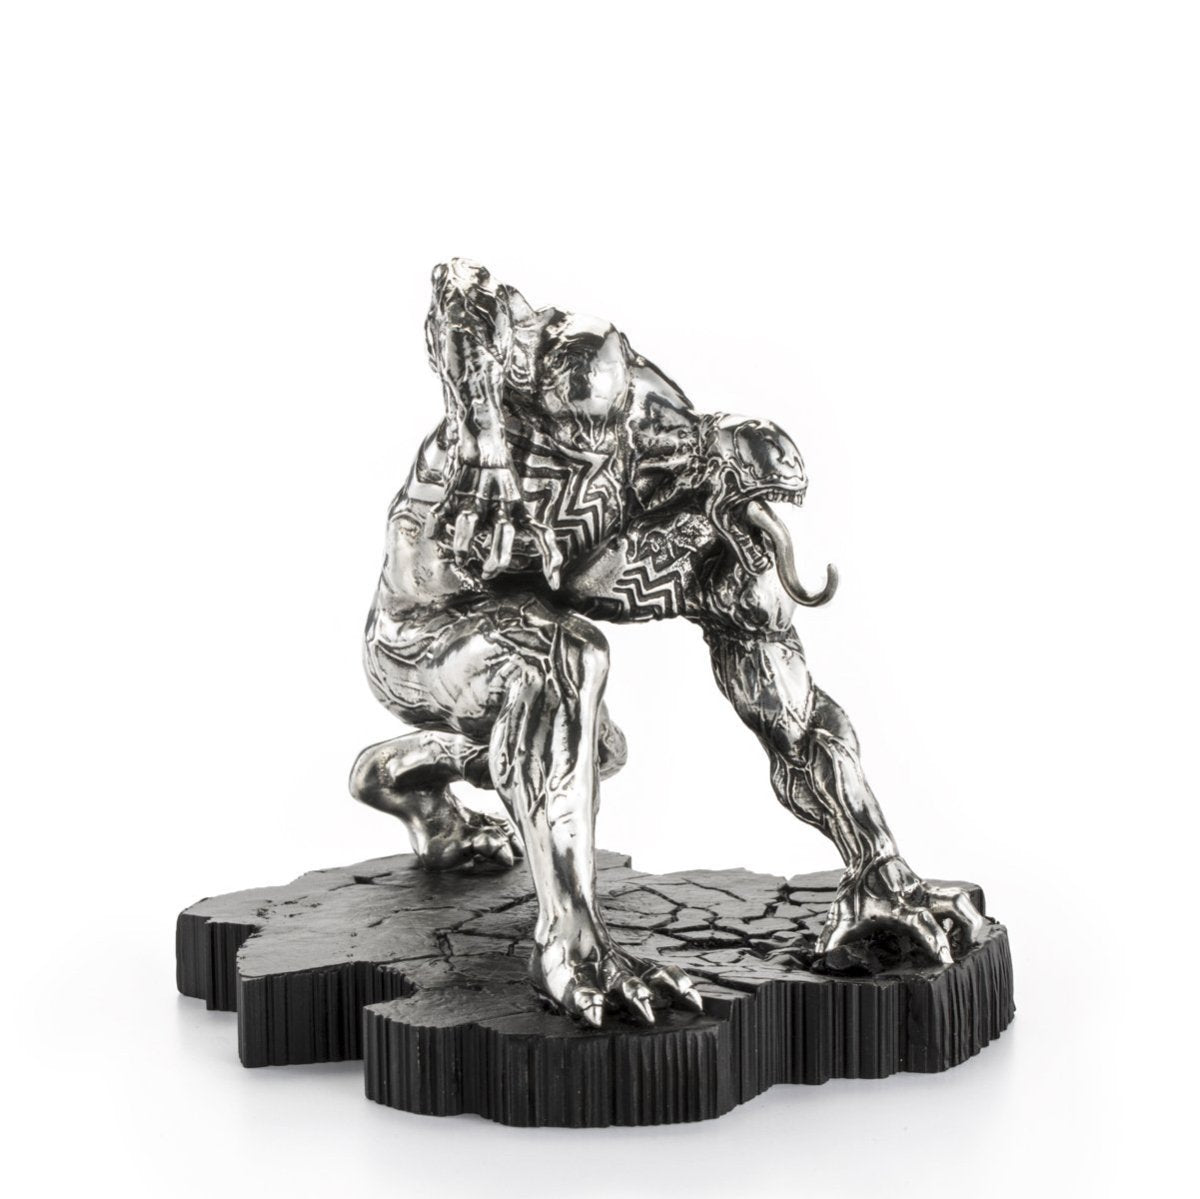 Venom Dark Origin Figurine - Marvel Collectible Statue